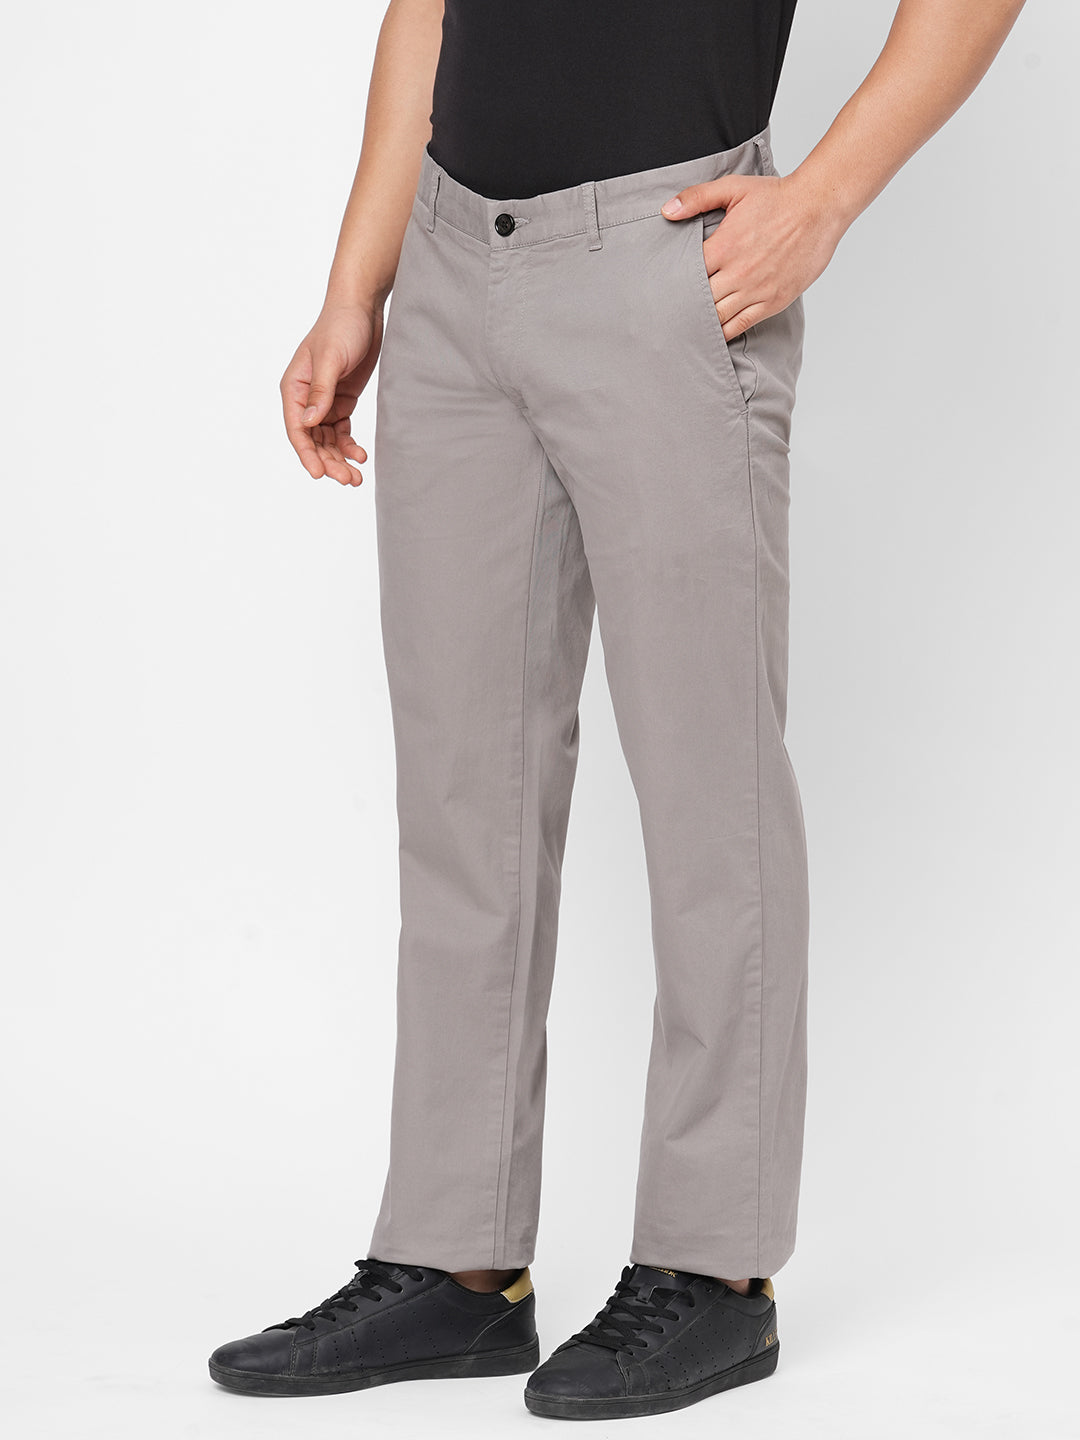 Men's Cotton Lycra Grey Regular Fit Pant